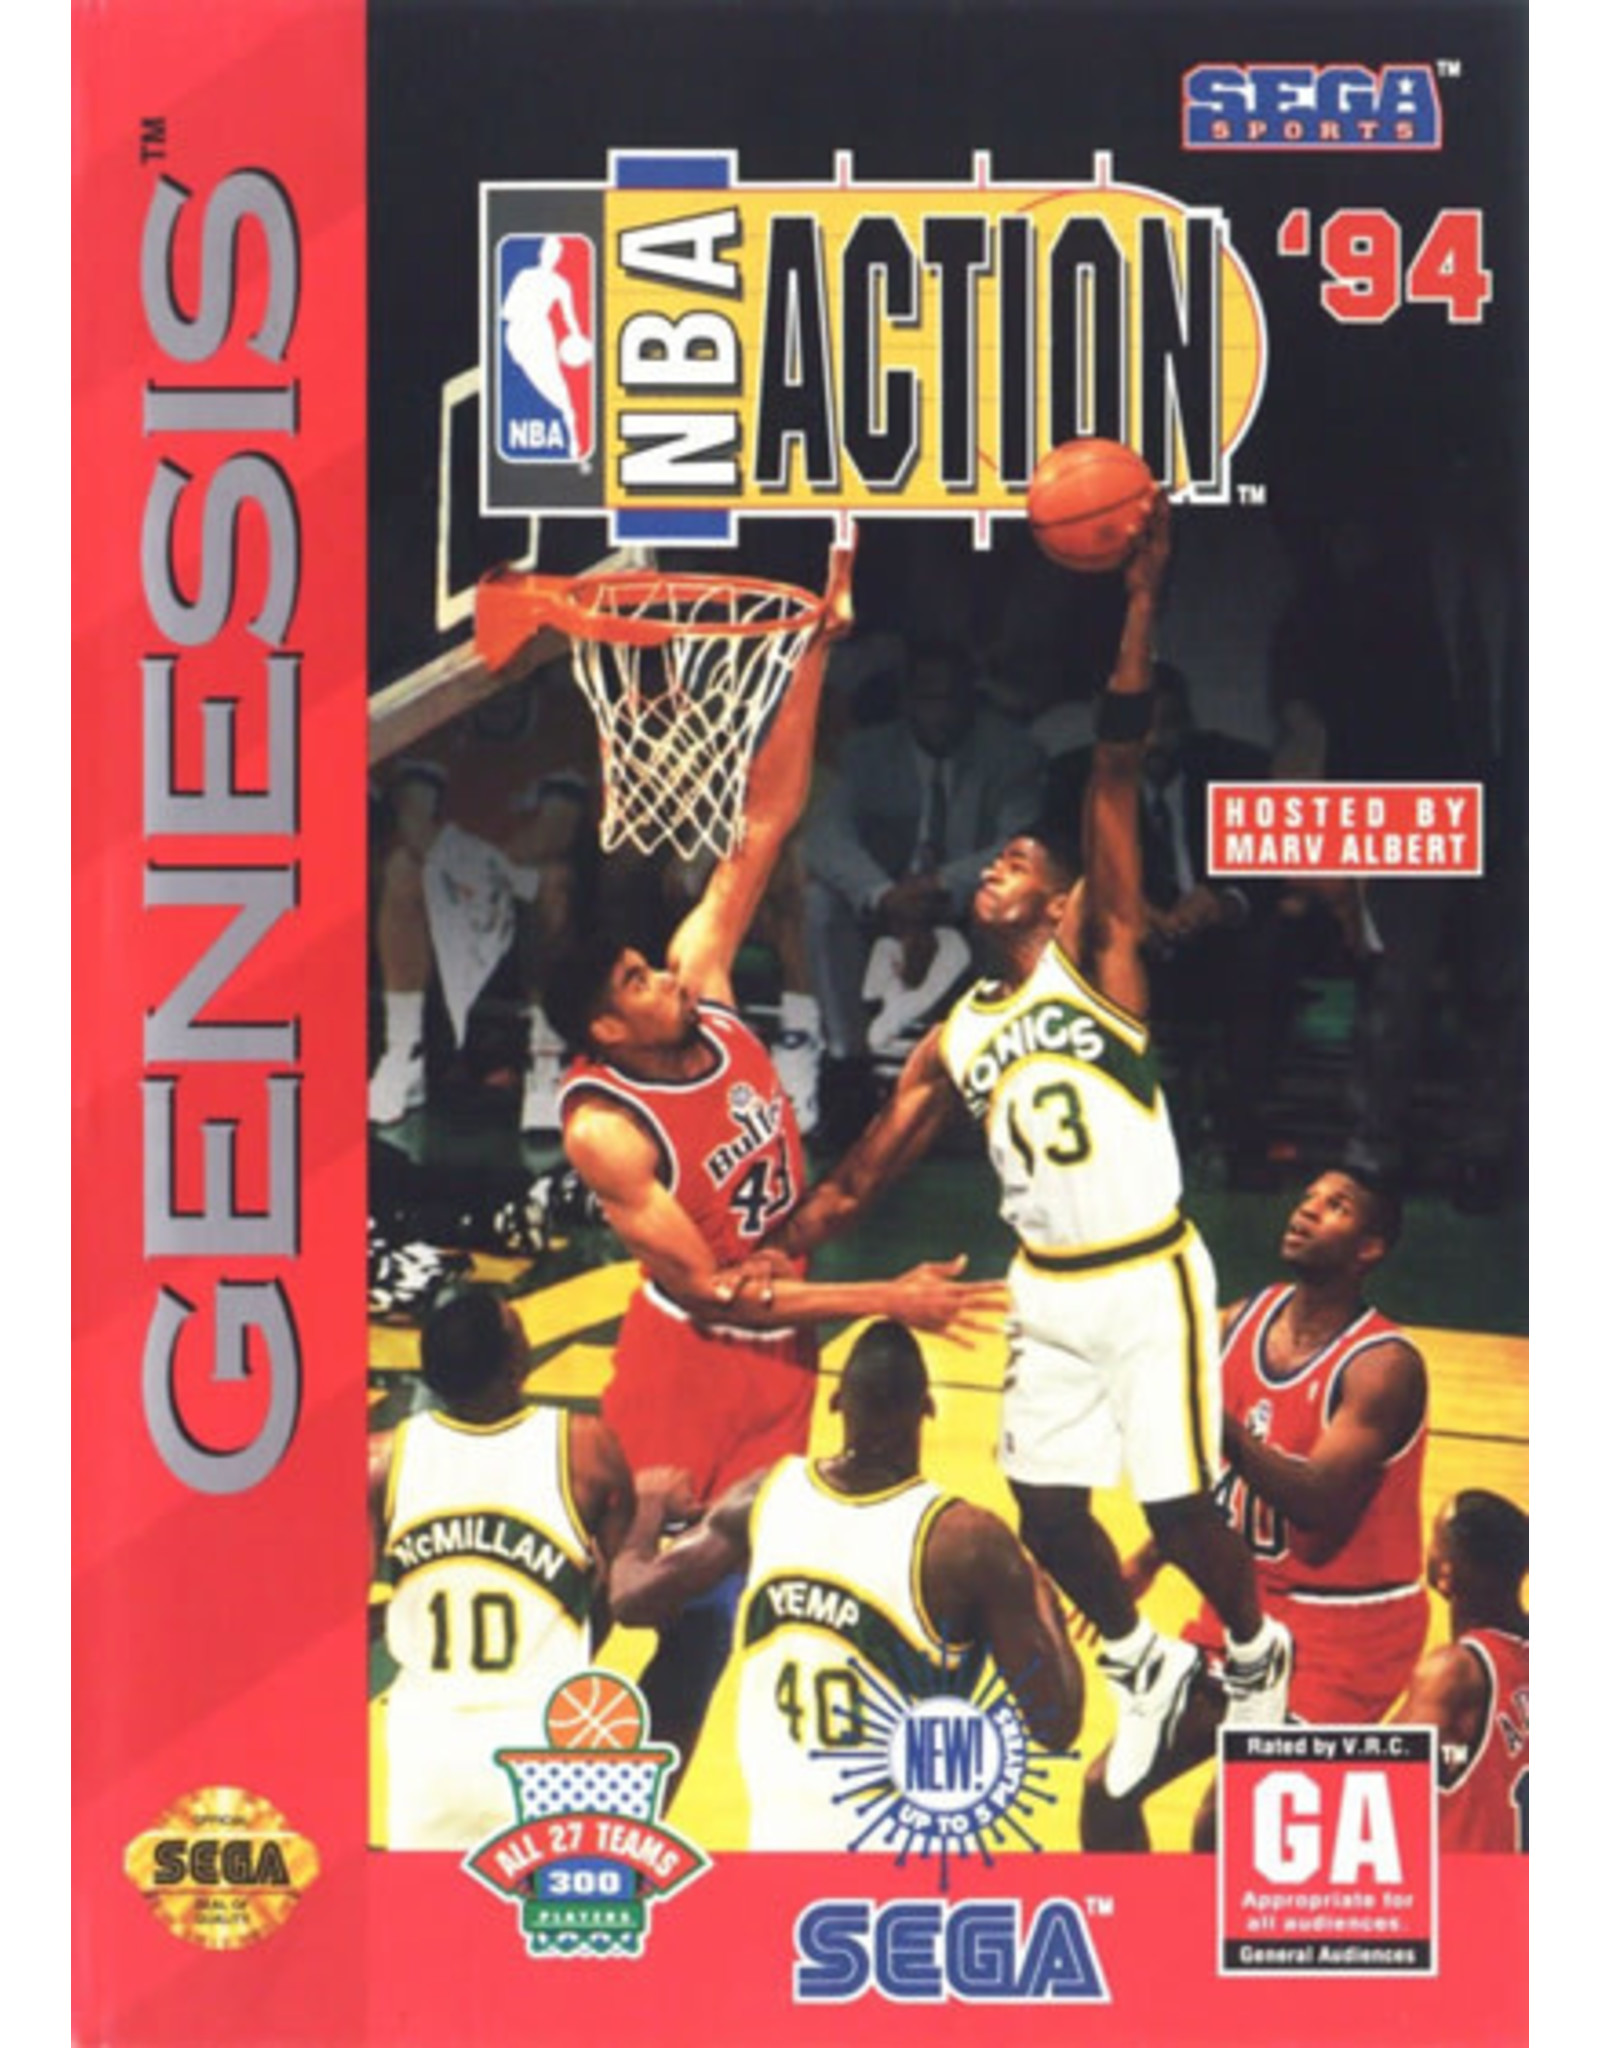 Sega Genesis NBA Action '94 (Boxed, No Manual)